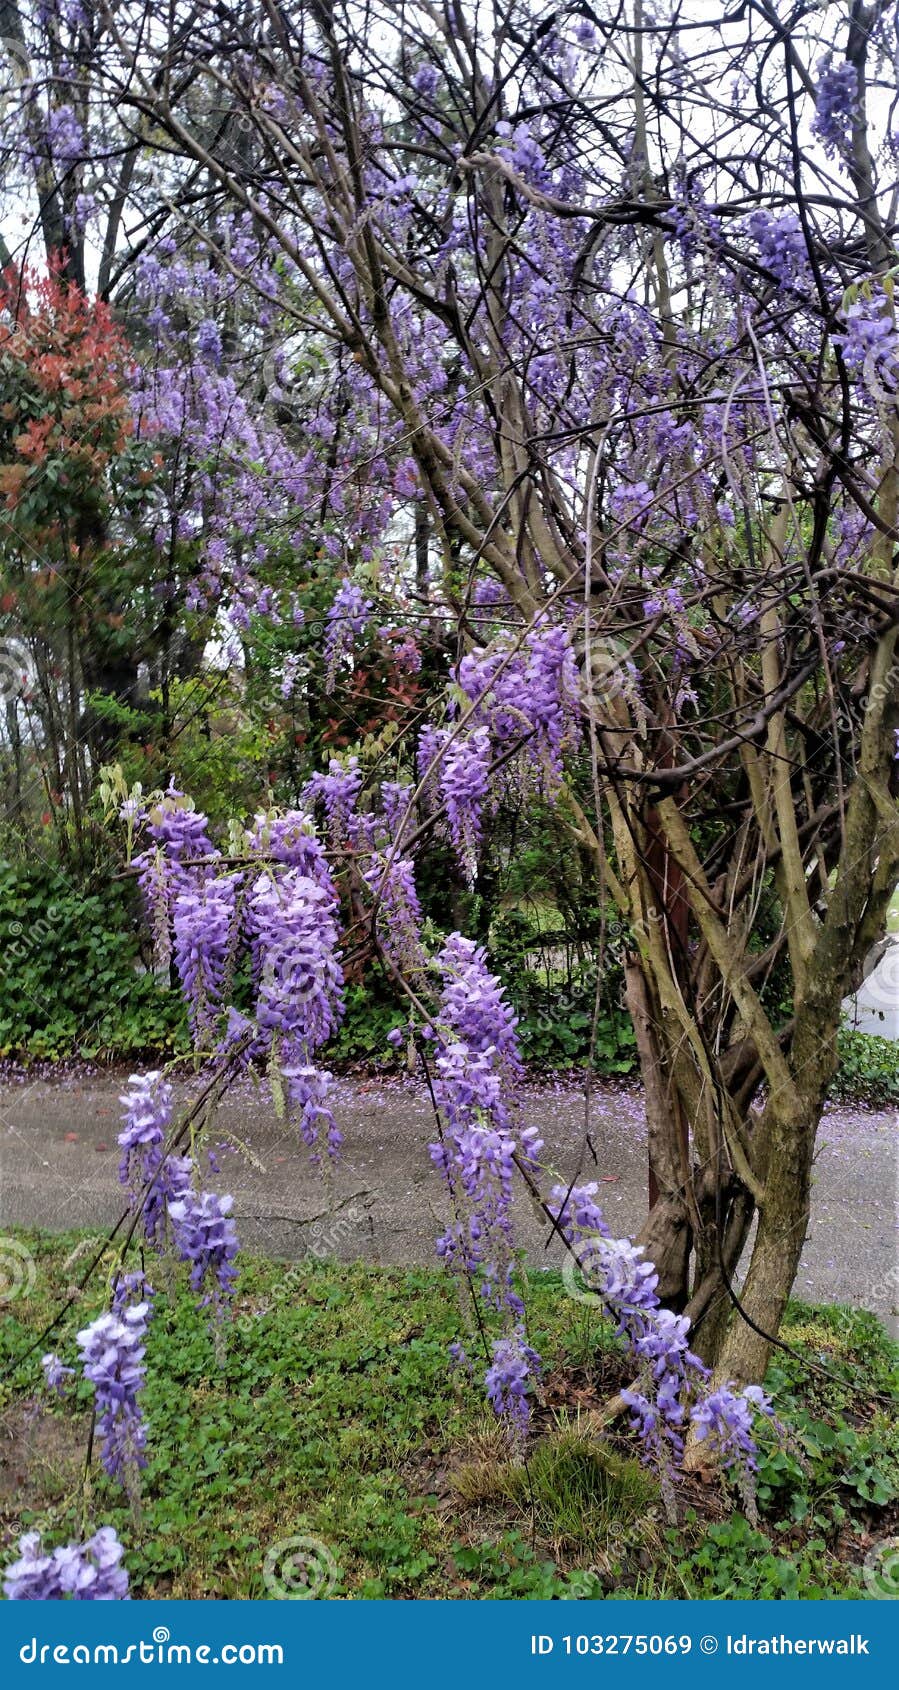 Flowering Purple Wisteria Vine Trailing On Host Tree In Springtime